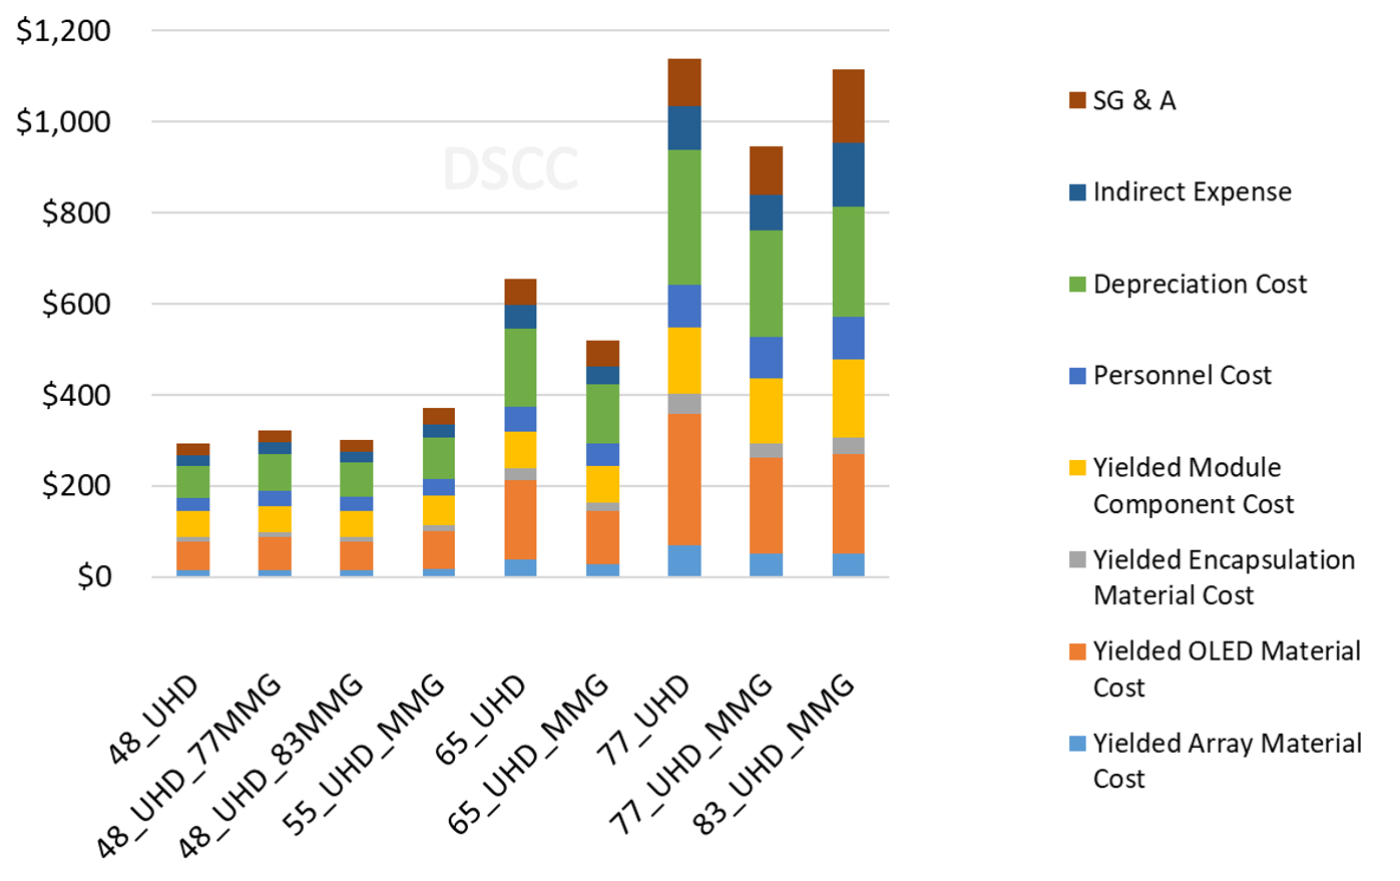 Source: DSCC Advanced TV Cost Report